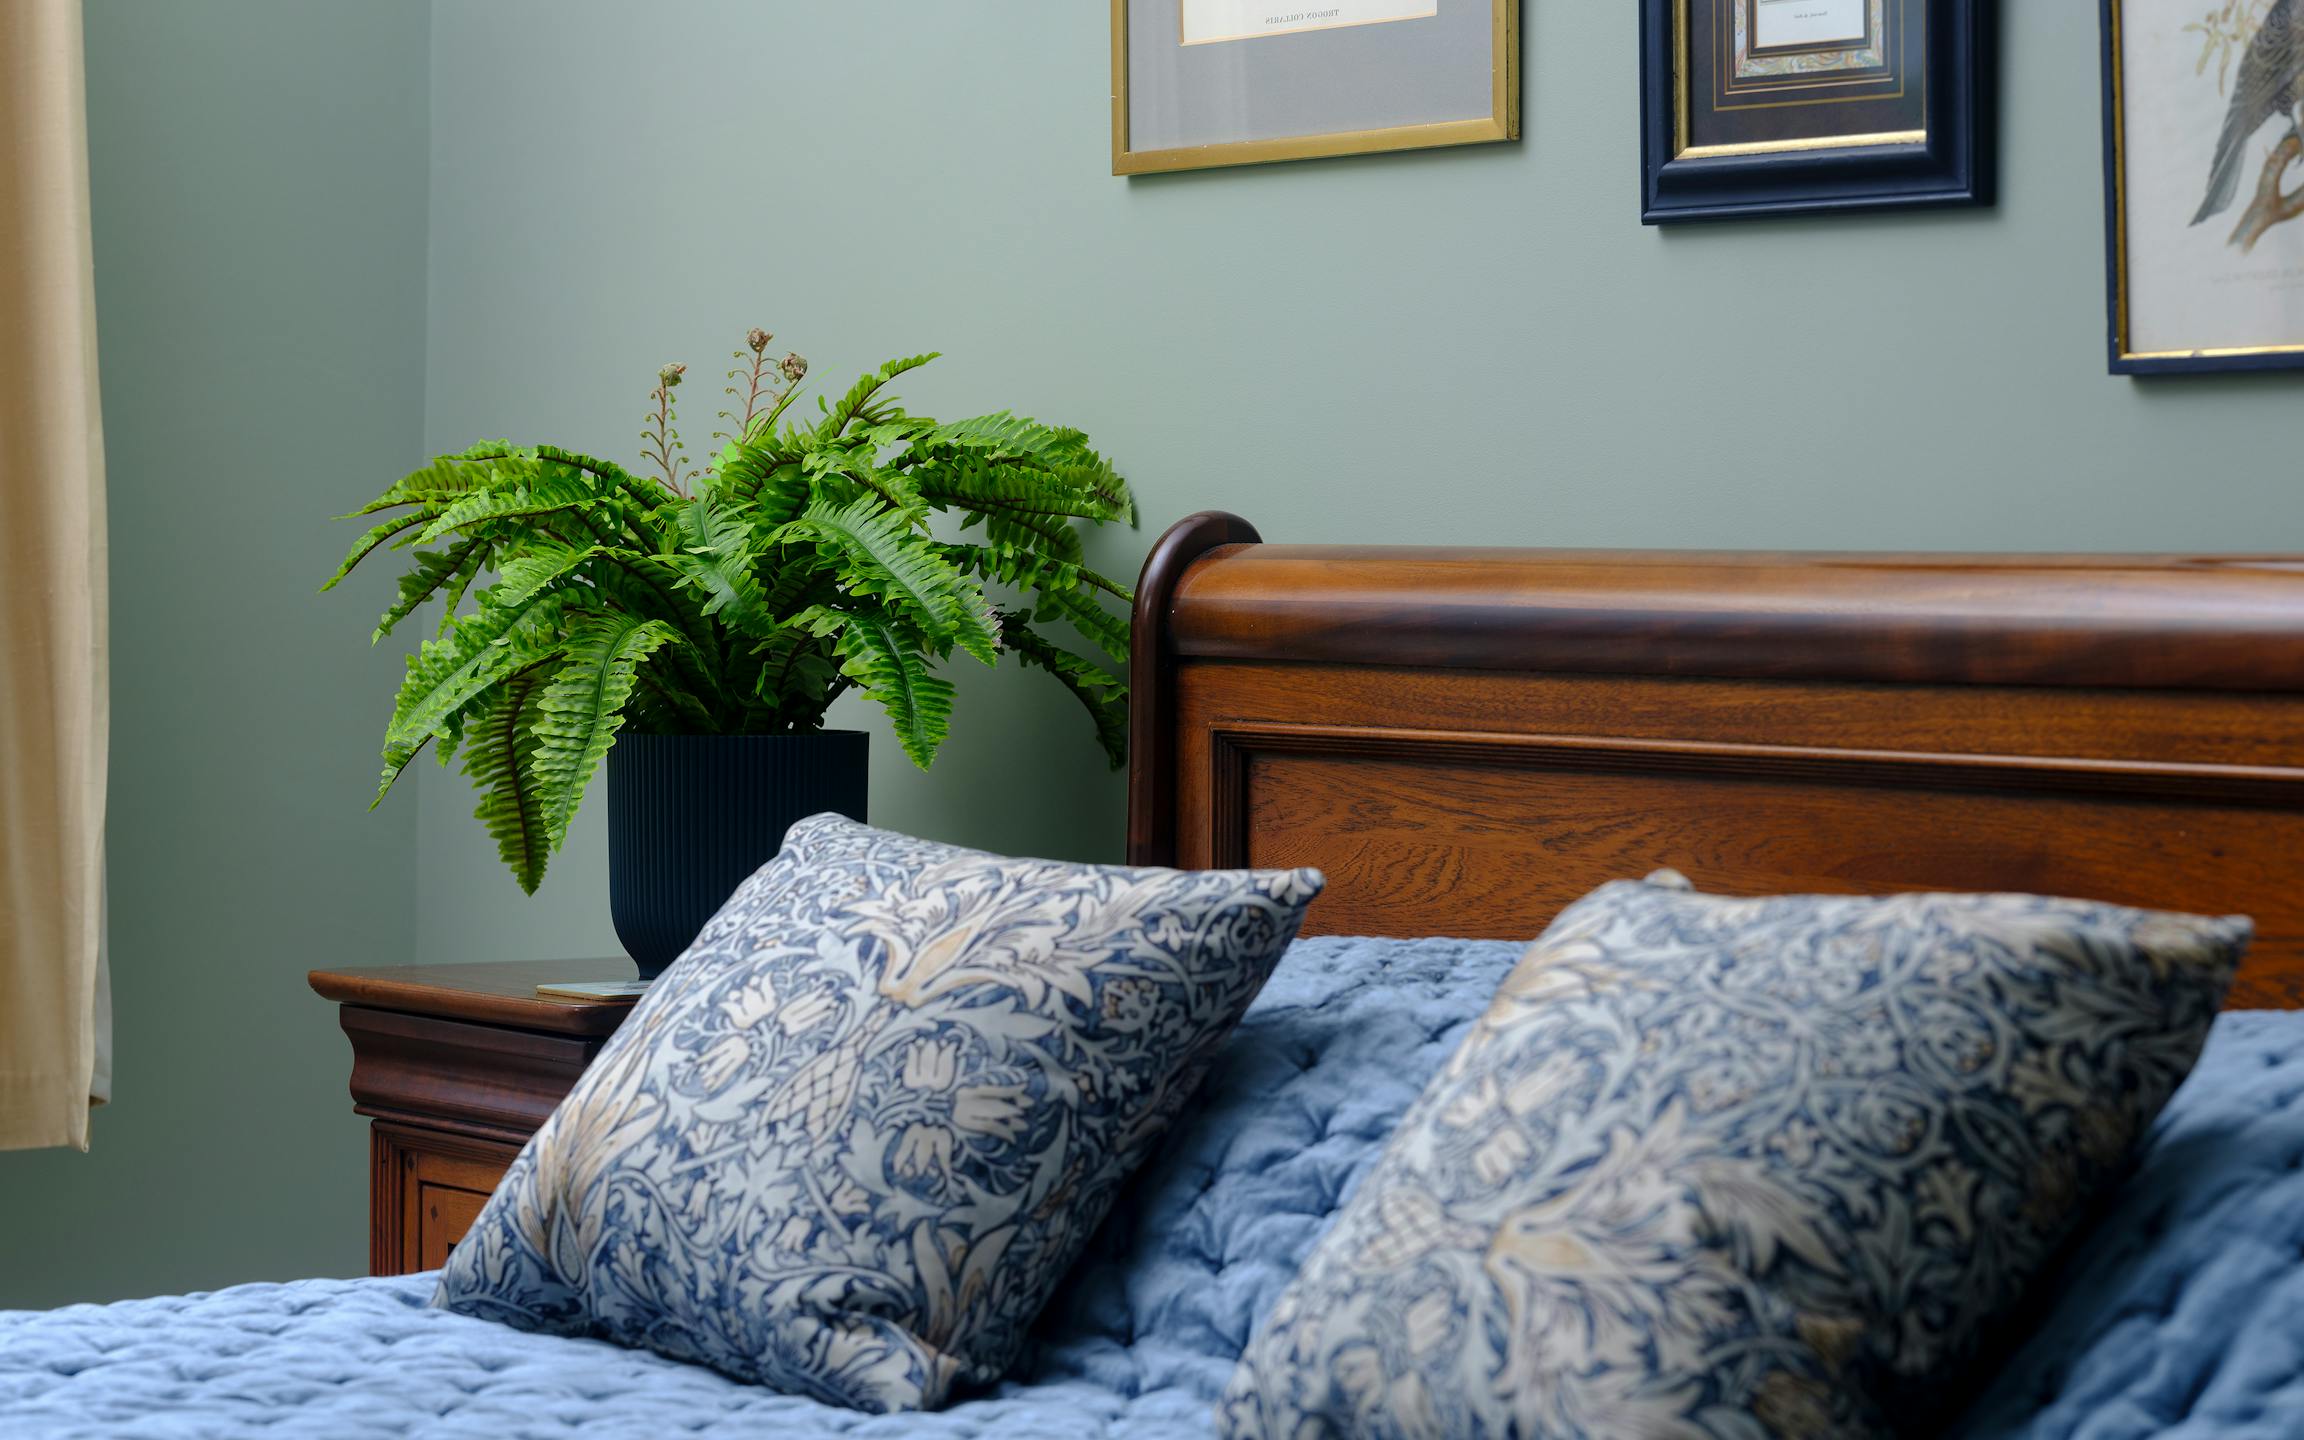 Faux Boston sword fern on bedside table - potted in deep blue planter